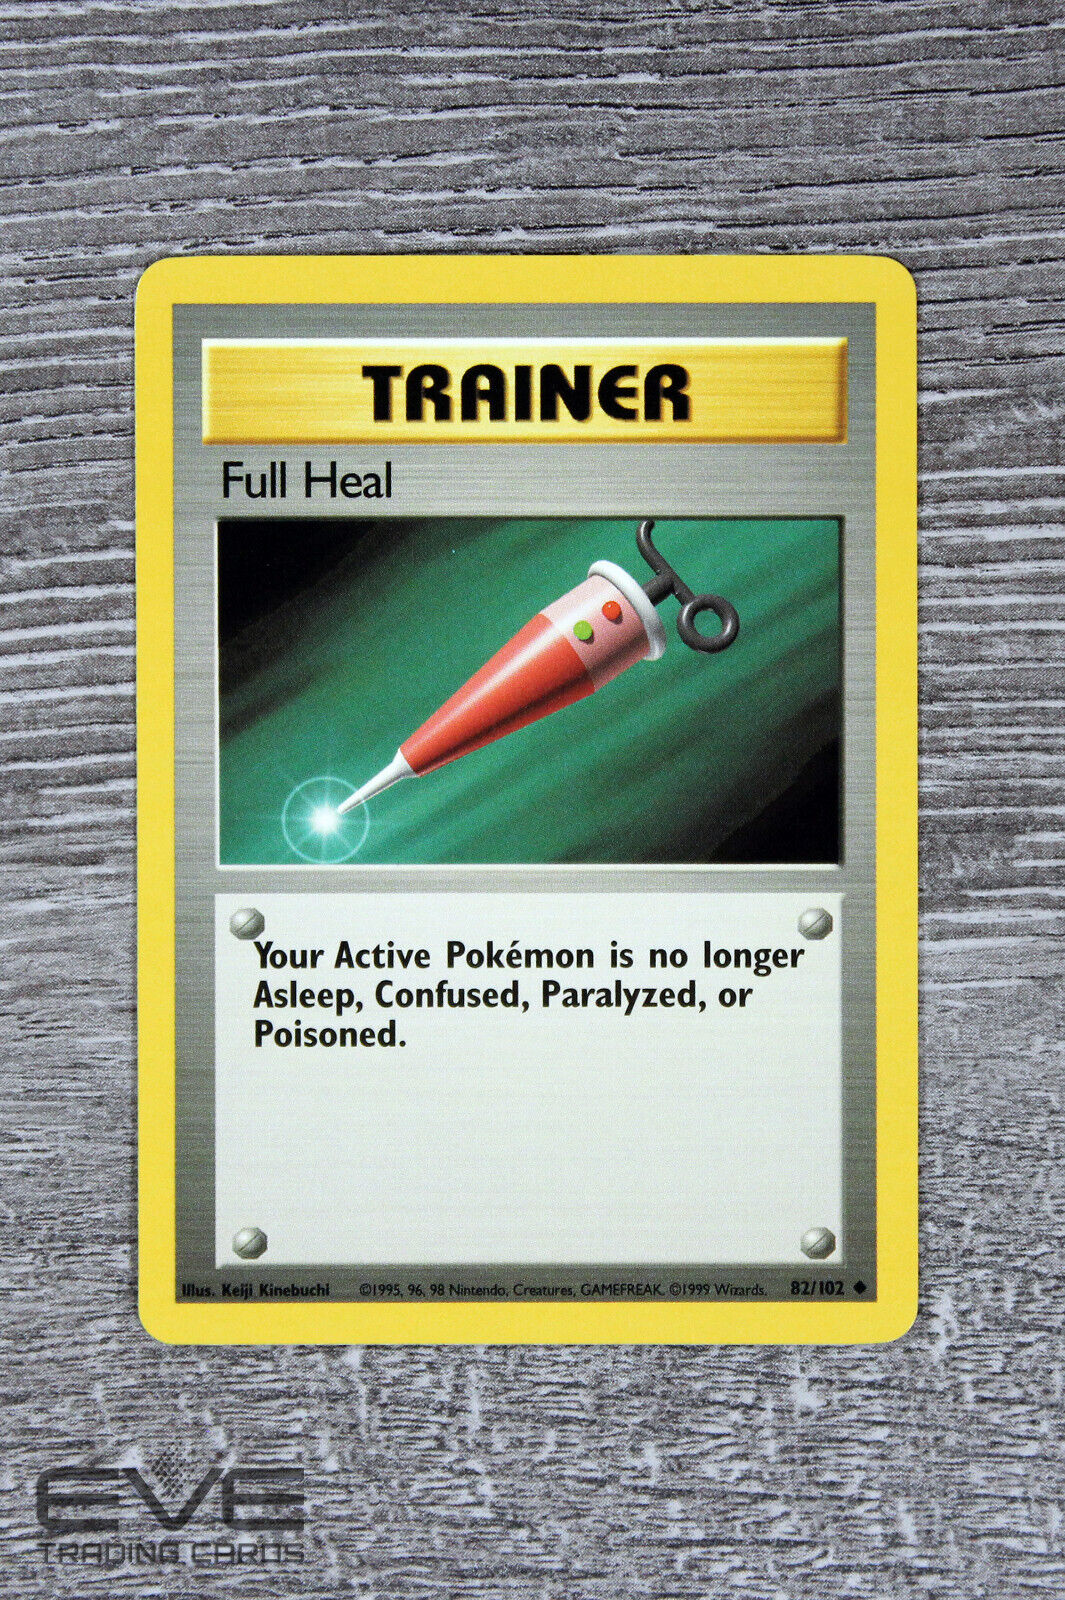 1999 Pokemon Trainer Card -Full Heal #82/102 Base Set WOTC - NM/M